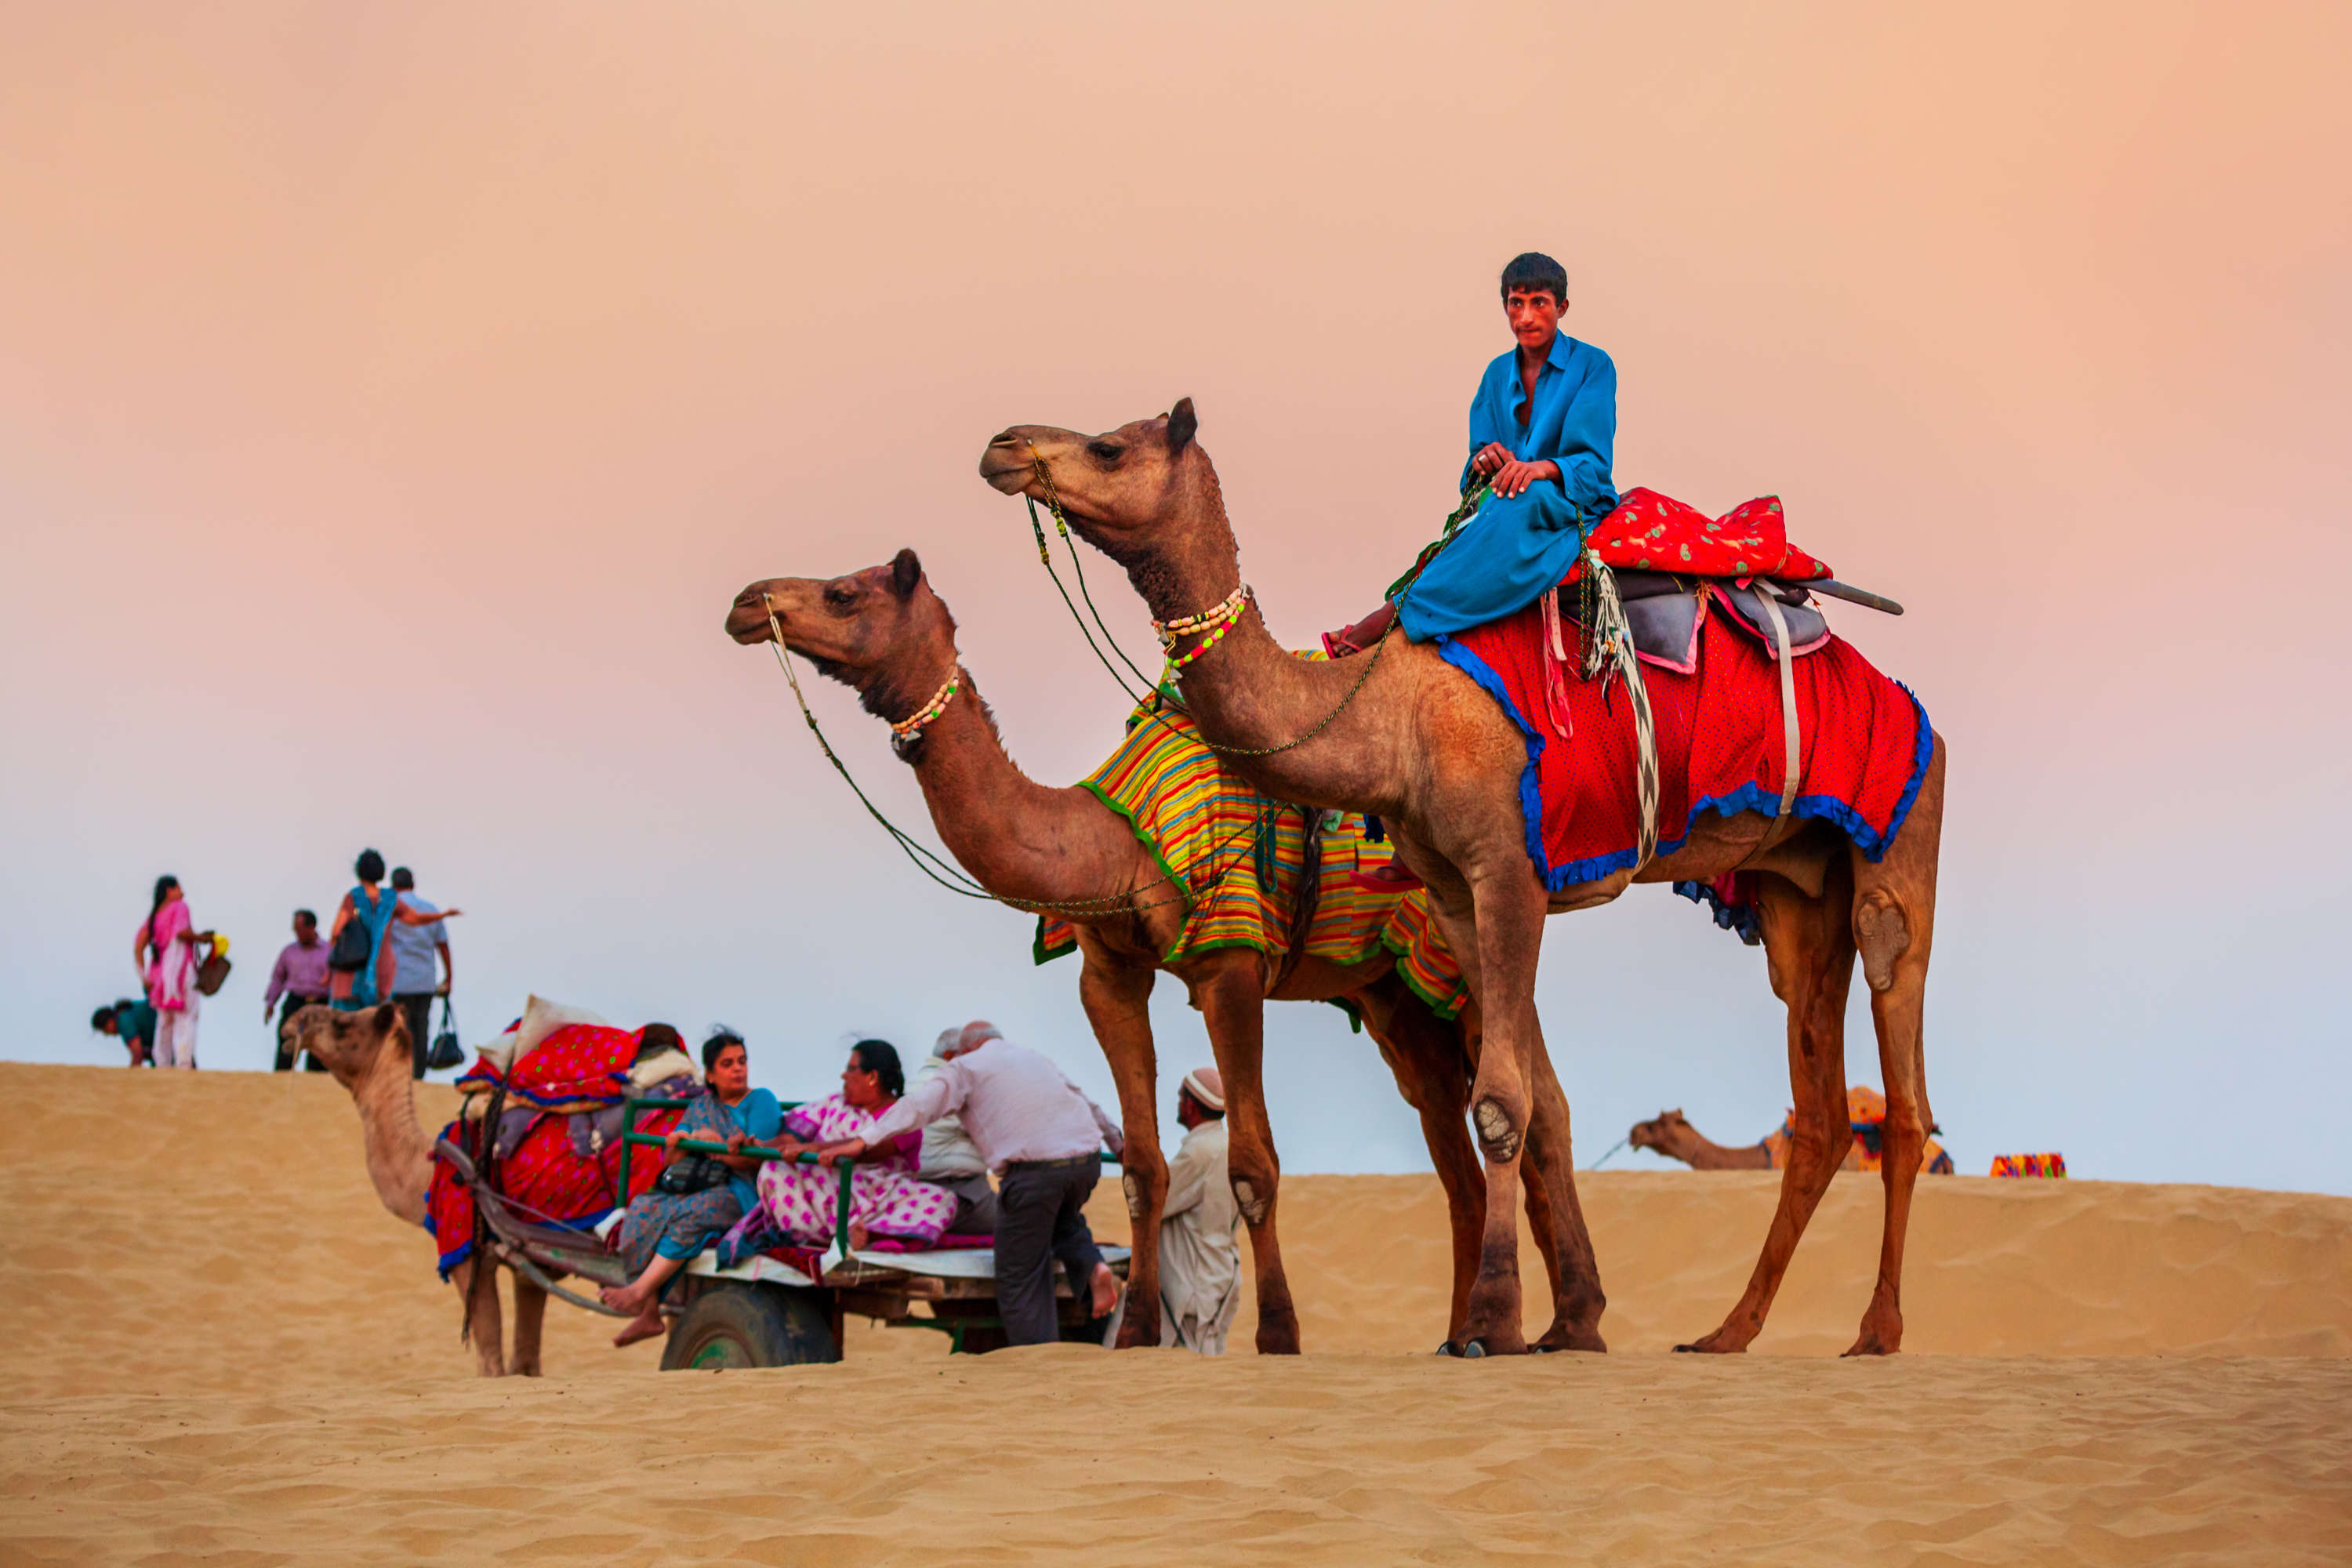 camel safari images